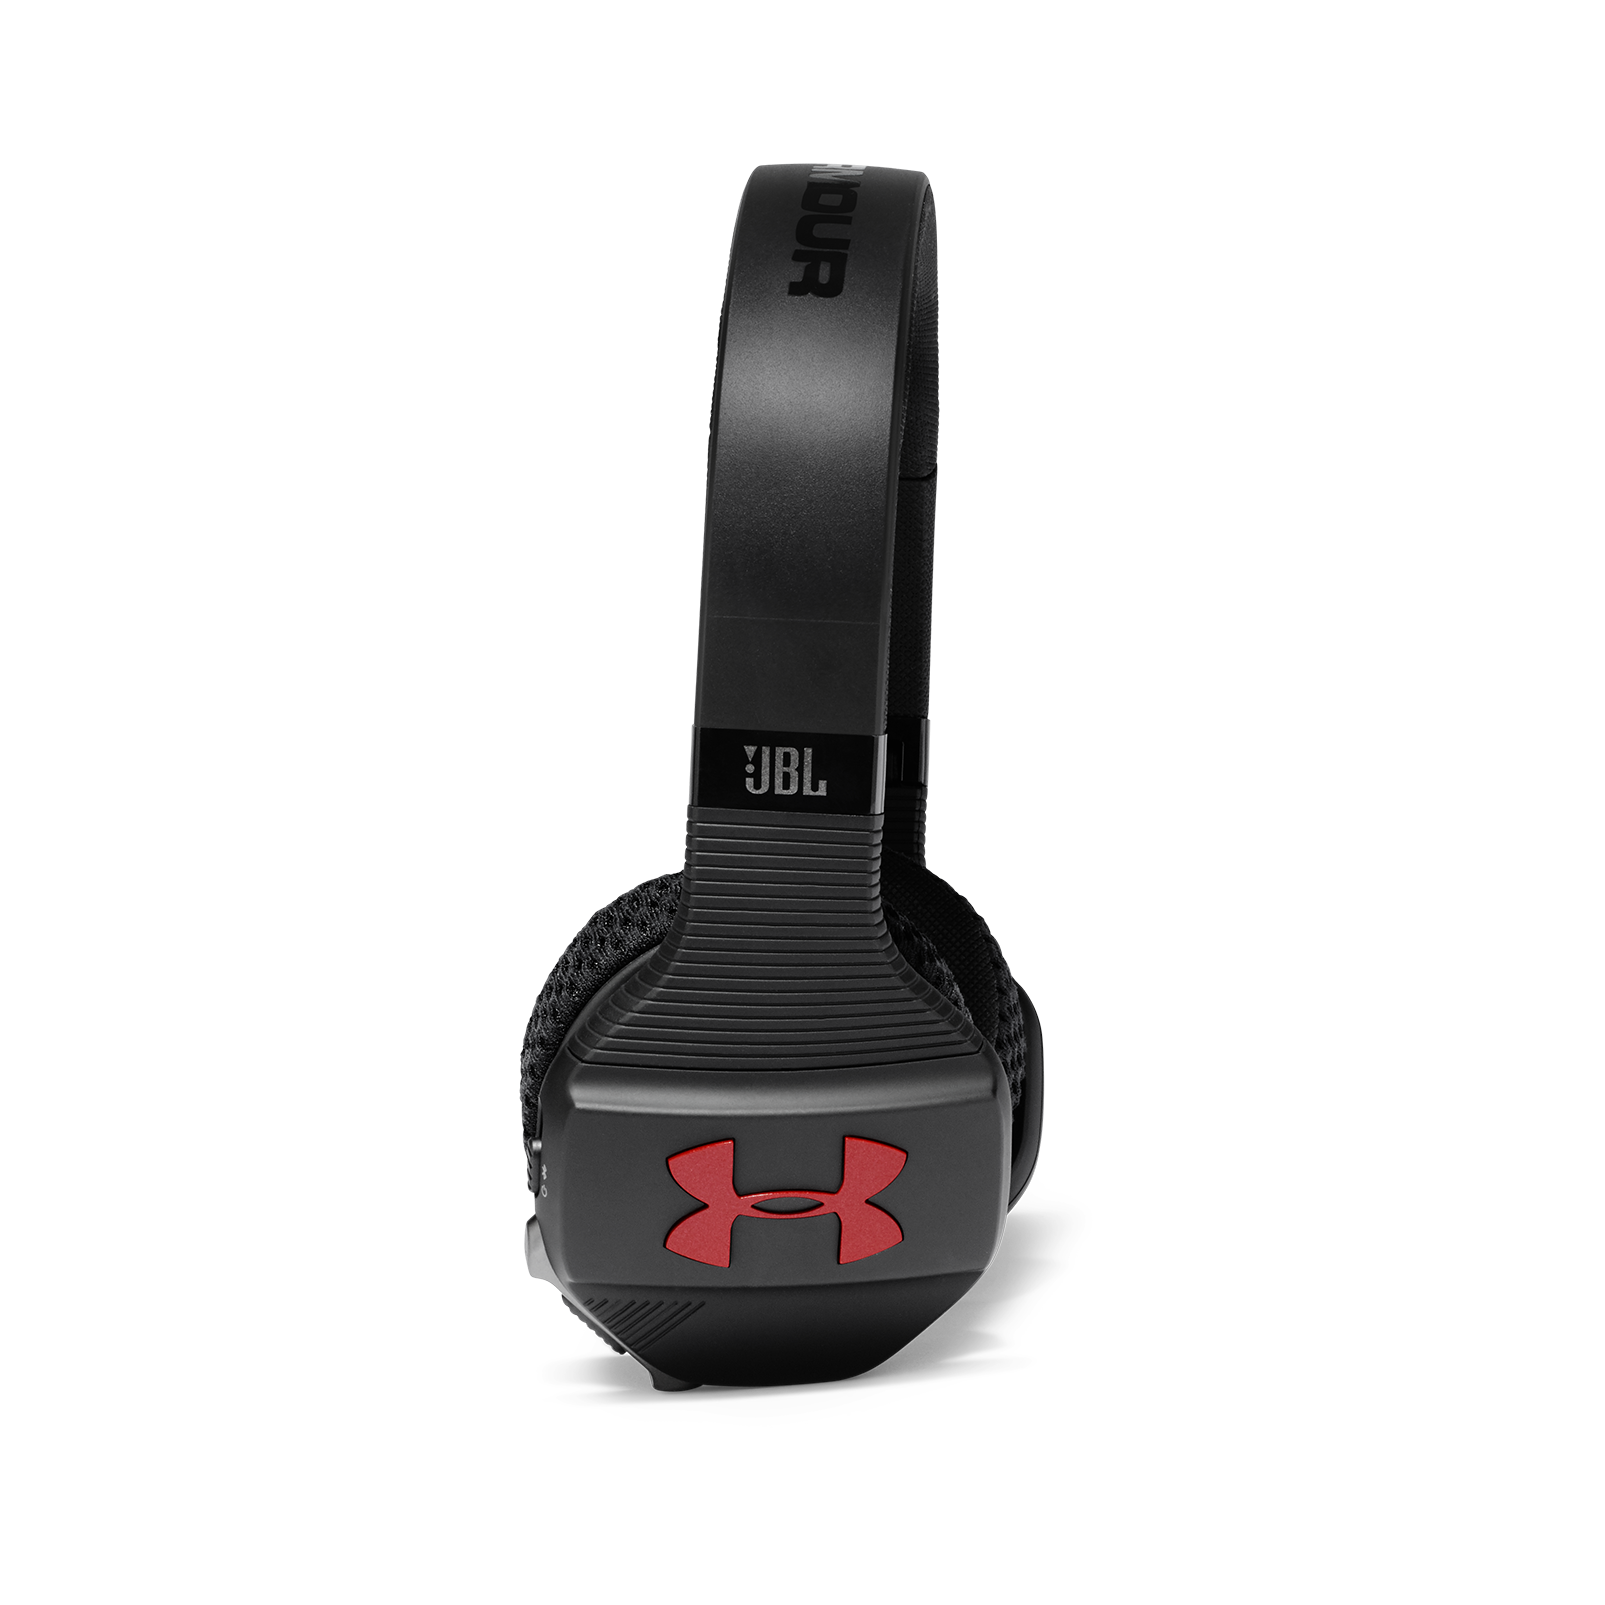 UA Sport Wireless Train – Engineered by JBL - Black / Red - Wireless on-ear headphone built for the gym - Detailshot 1